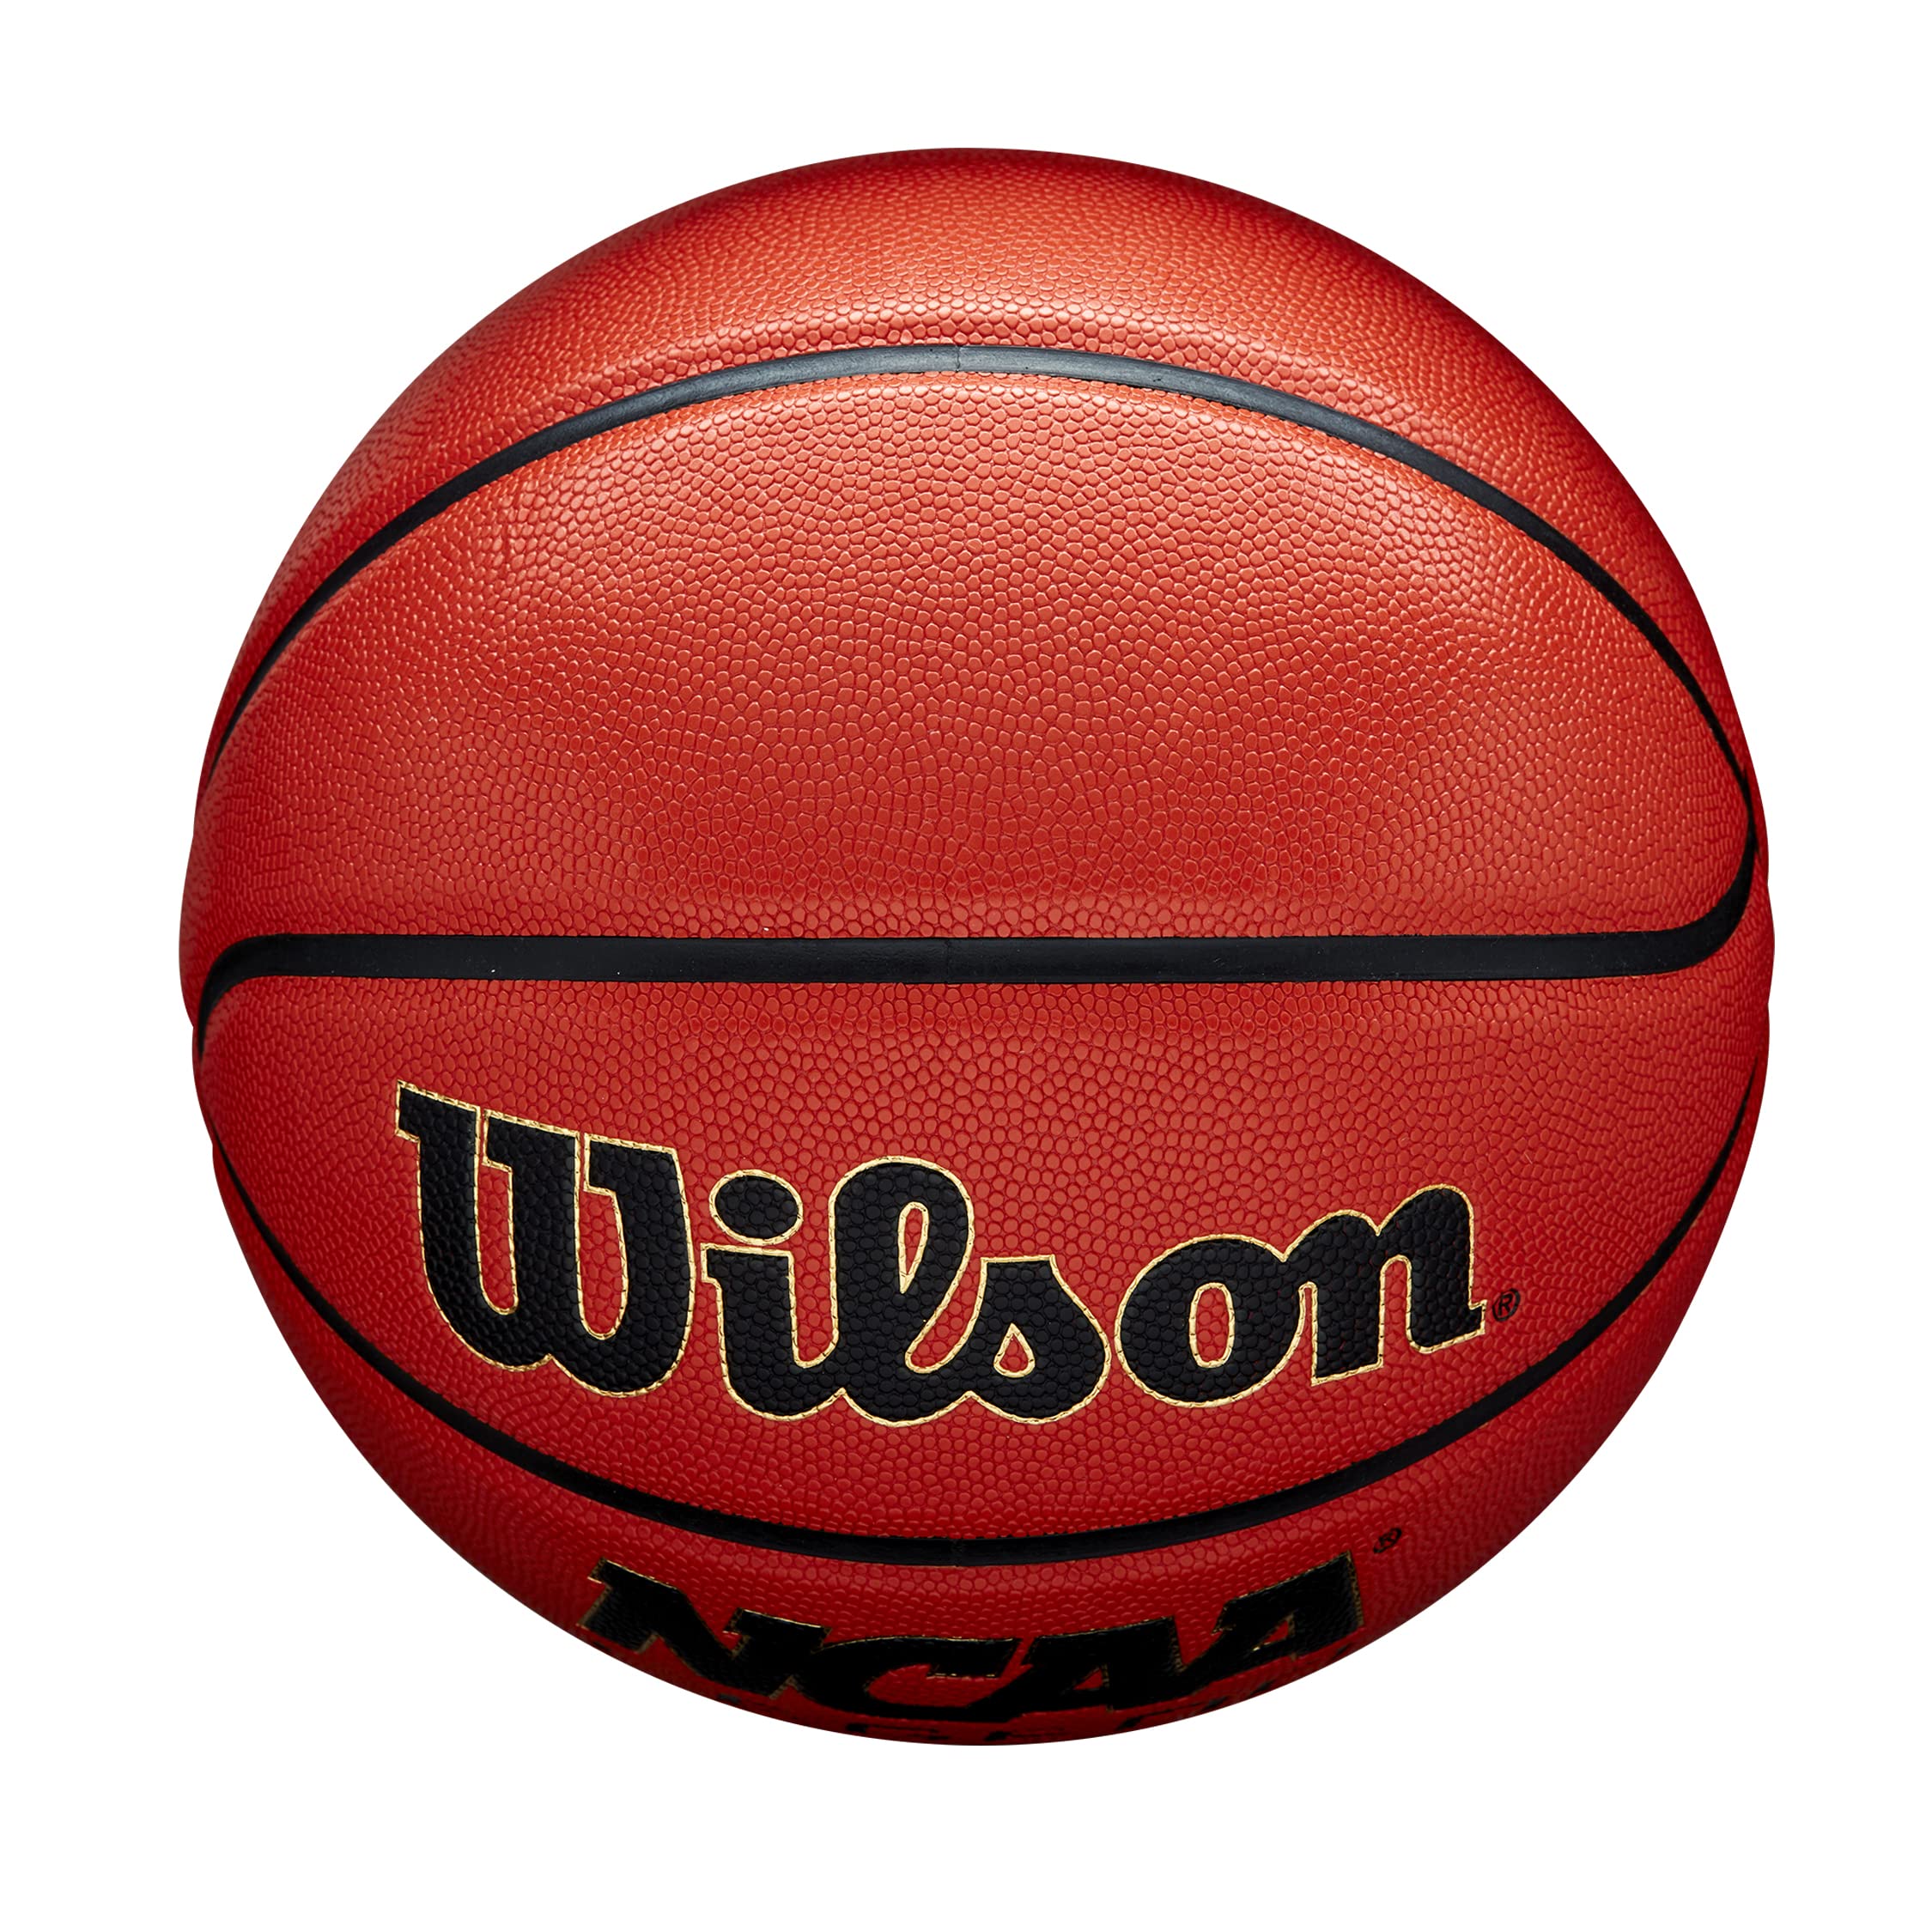 WILSON NCAA Legend Basketballs - 29.5